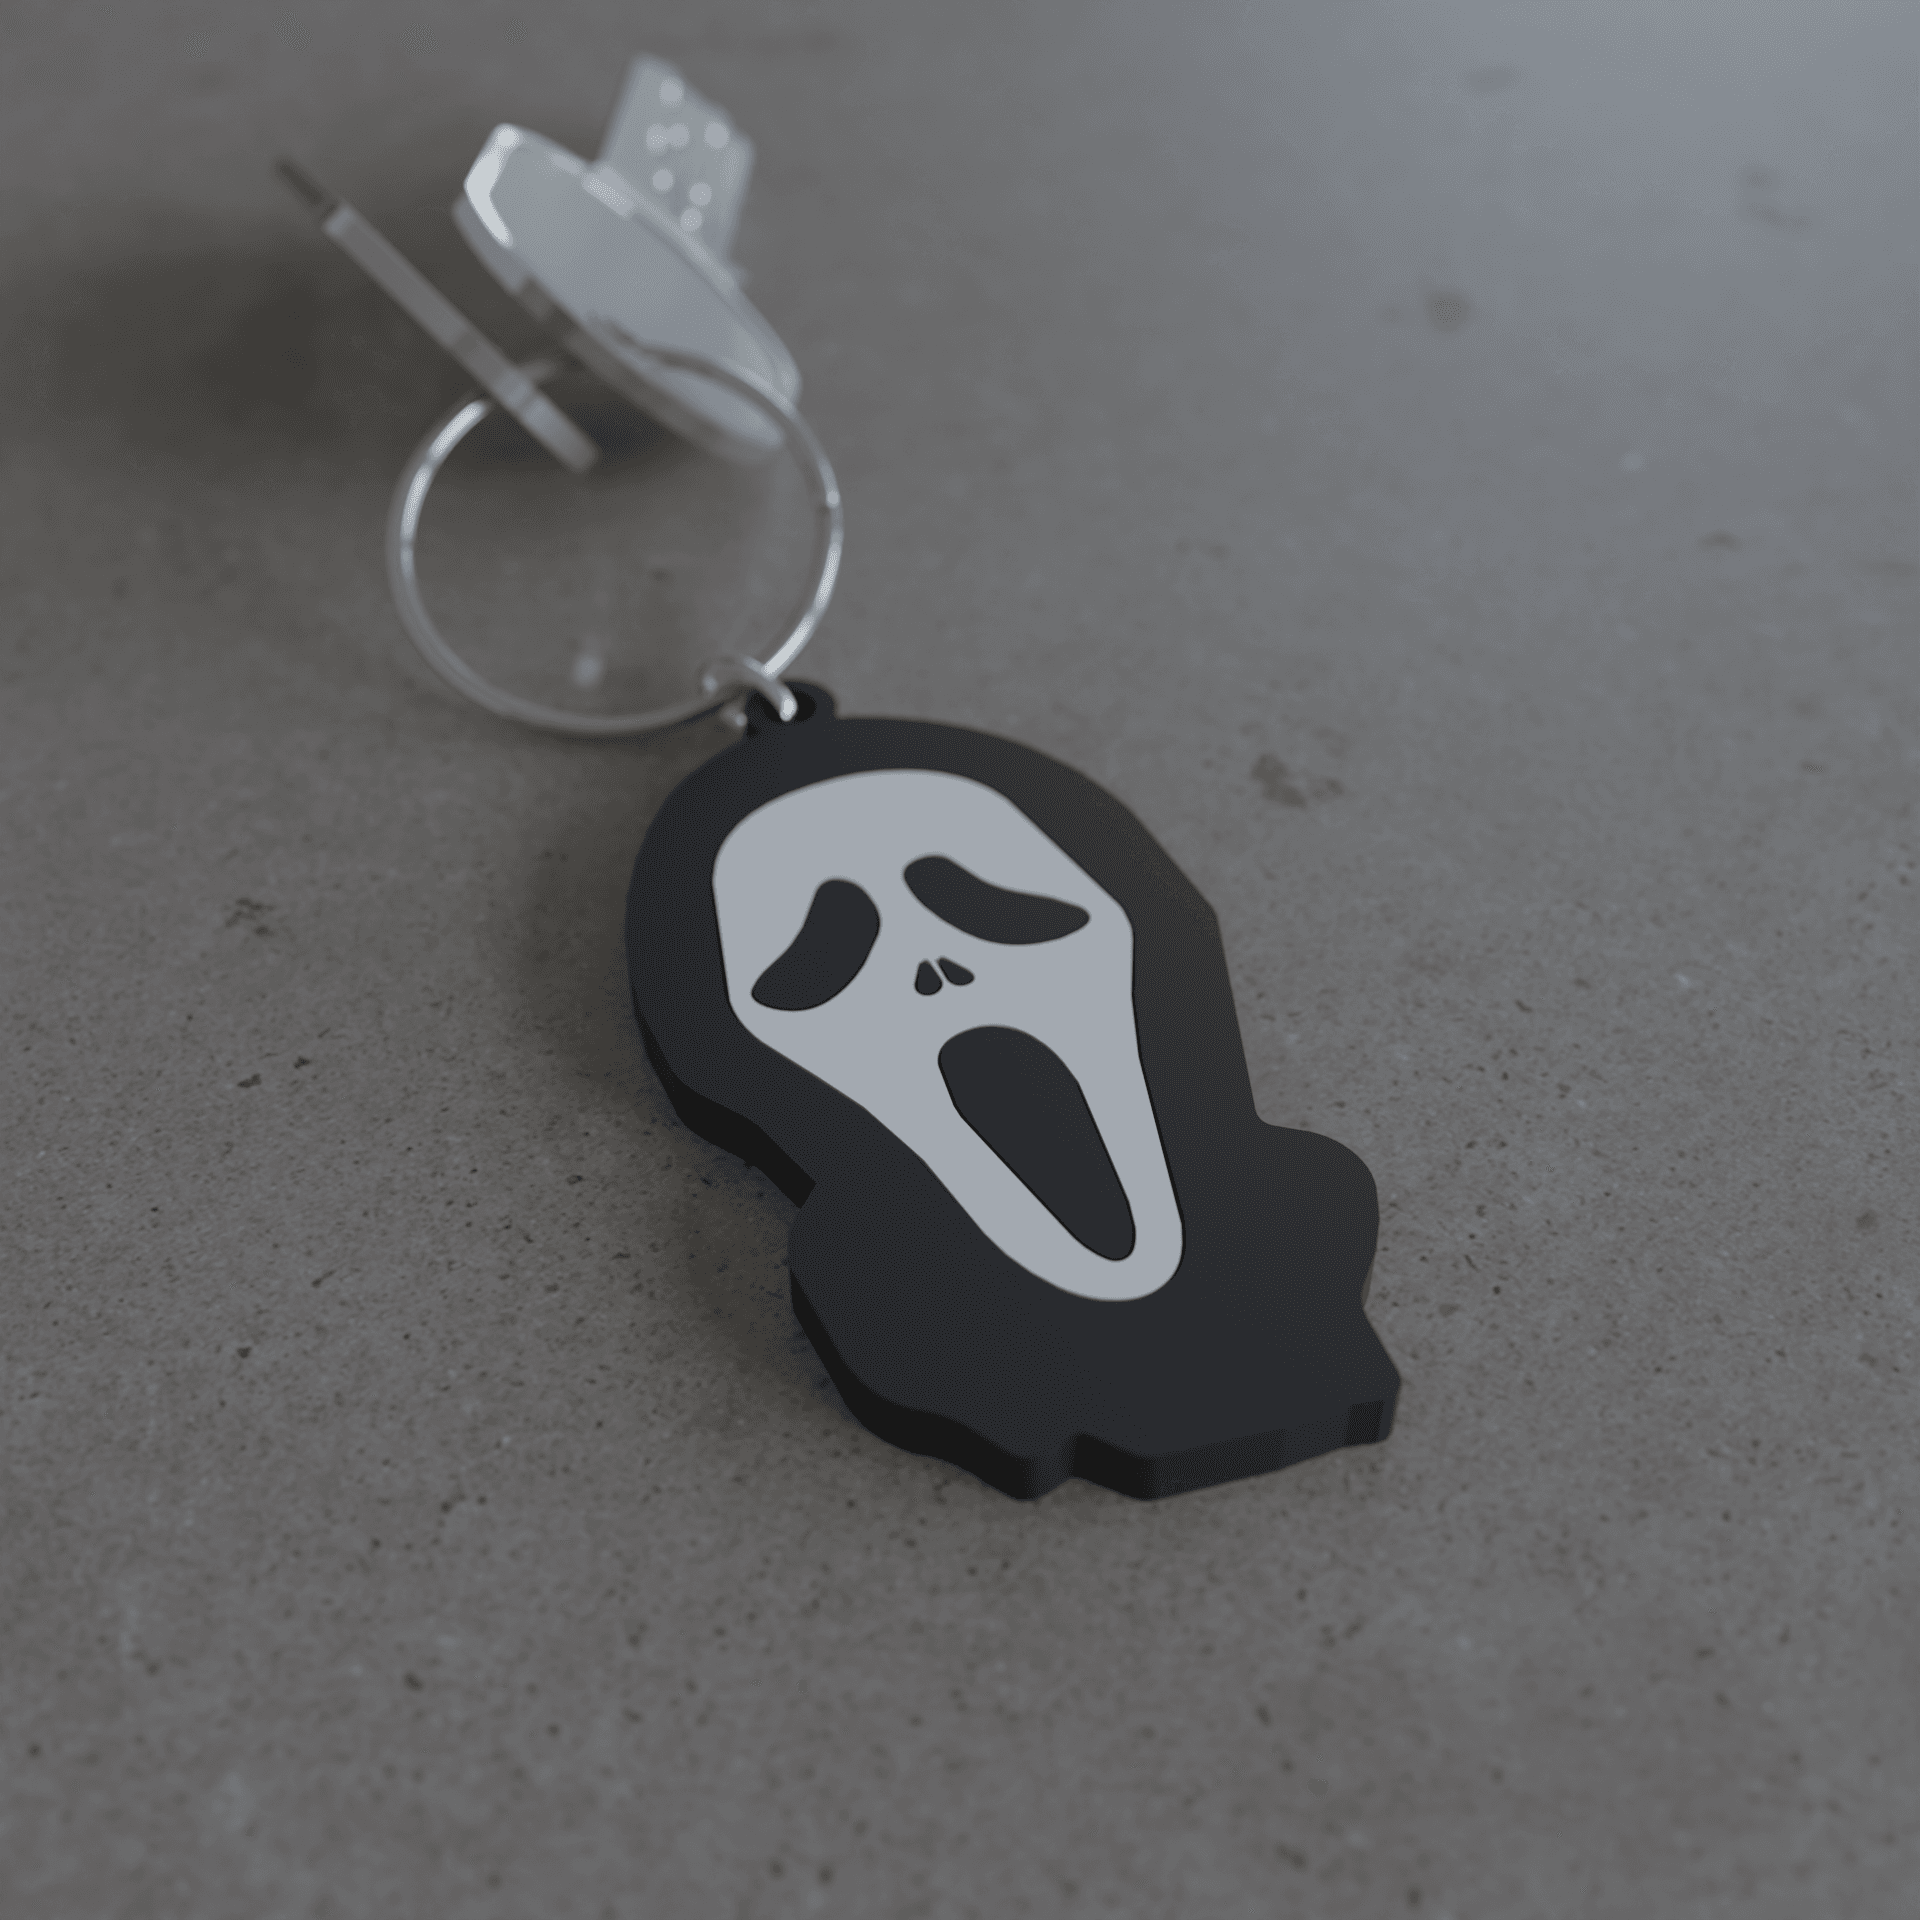 Ghostface keychain 3d model